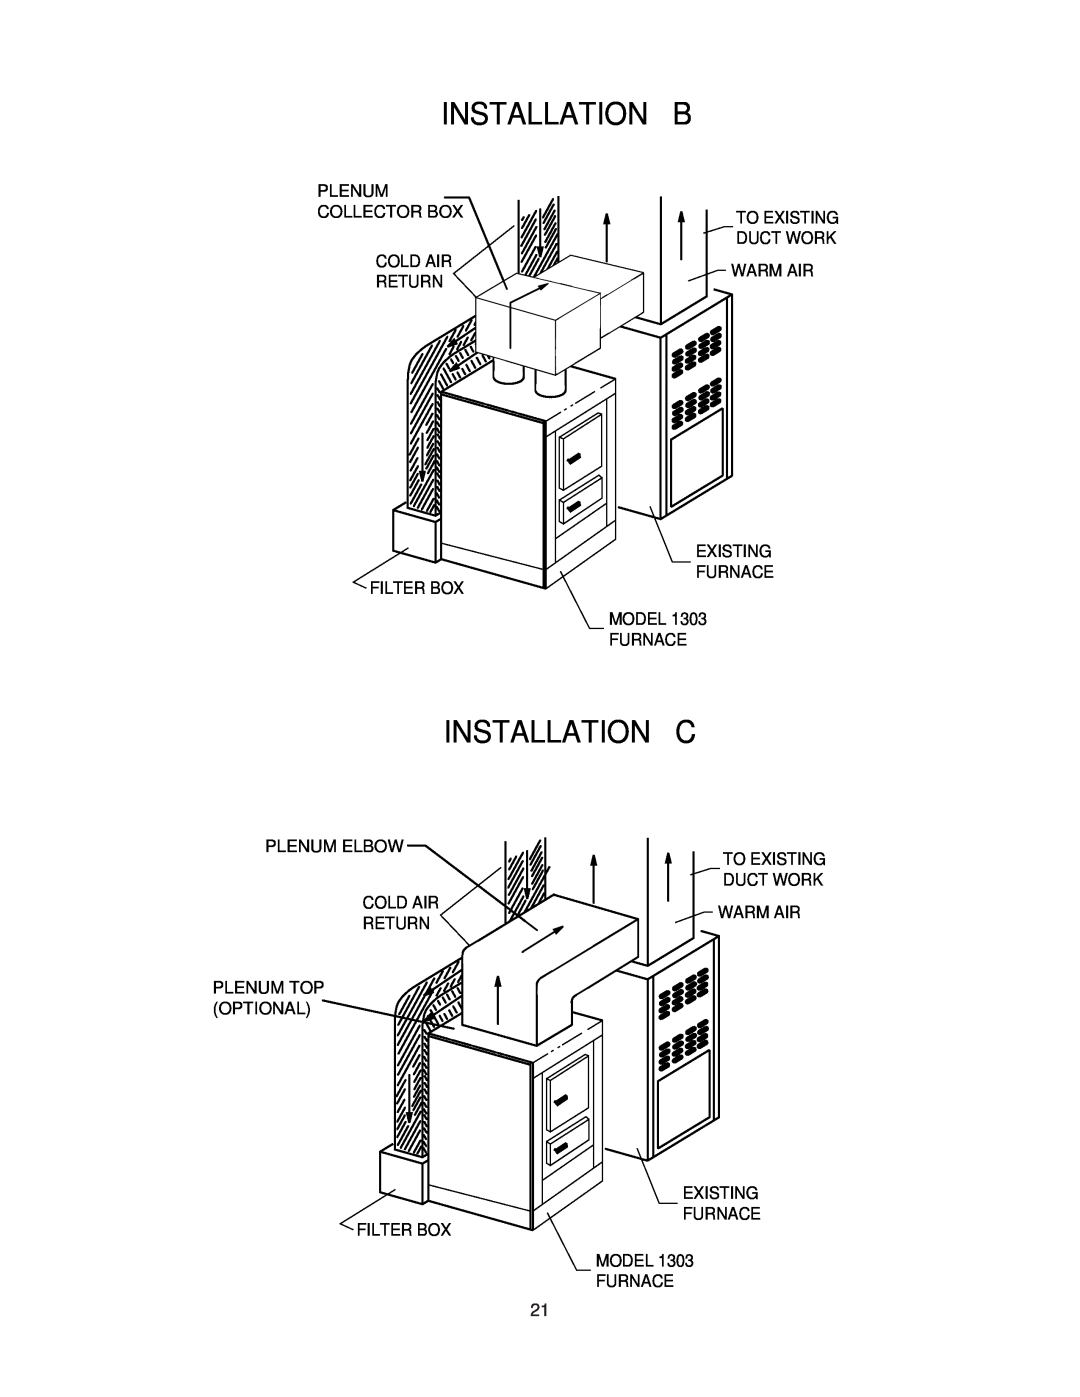 United States Stove AIR Installation B, Installation C, Plenum Collector Box Cold Air Return Filter Box, Model Furnace 